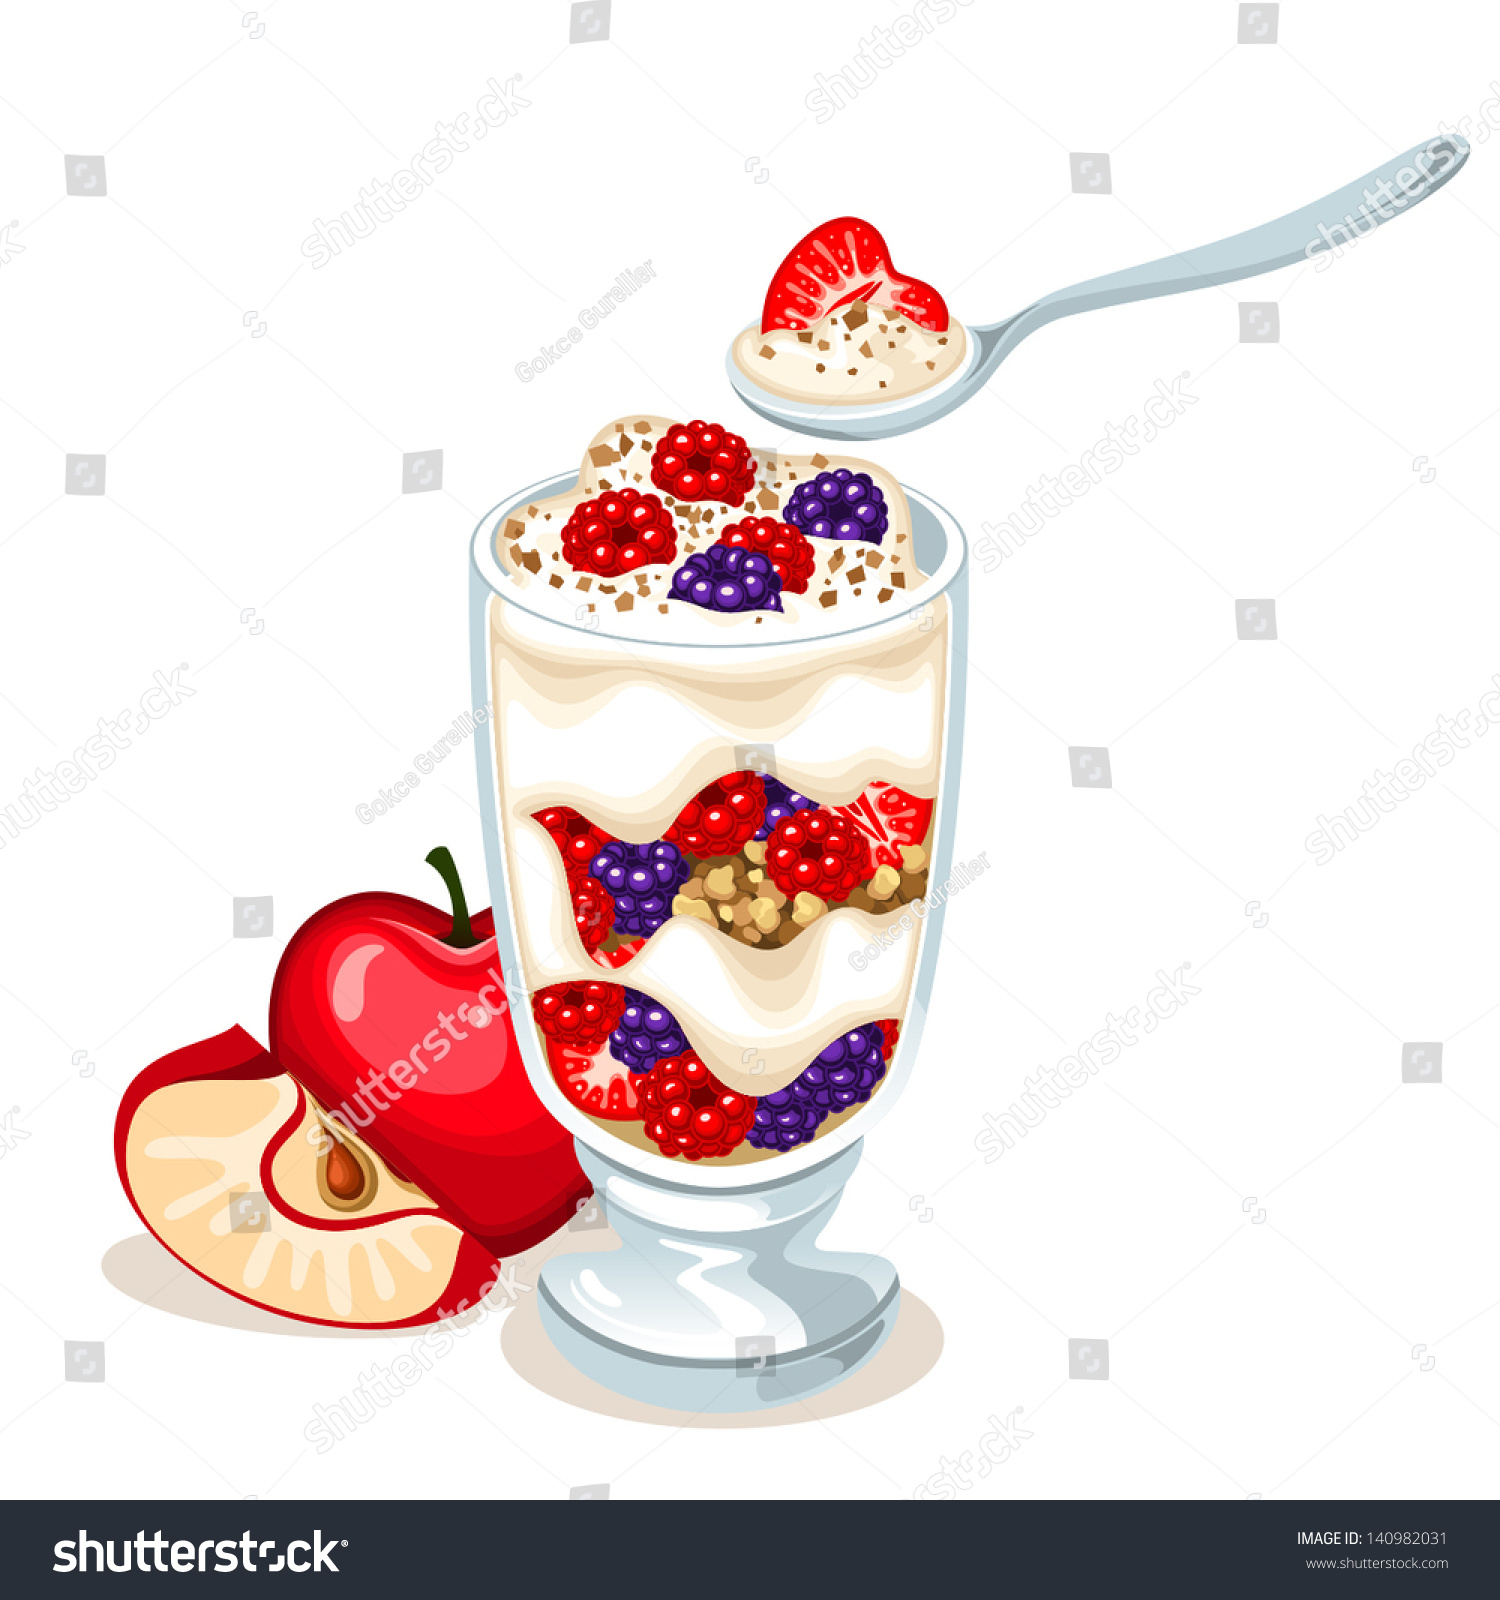 yogurt clip art free - photo #42